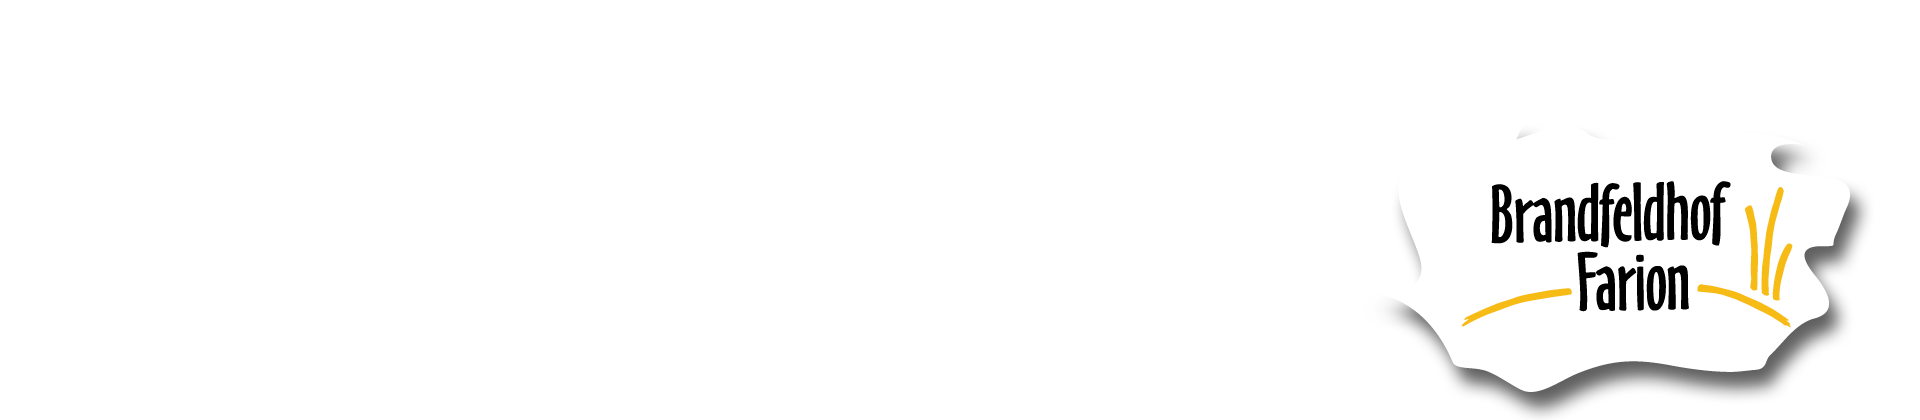 brandfeldhof-logo-2020-r2.png